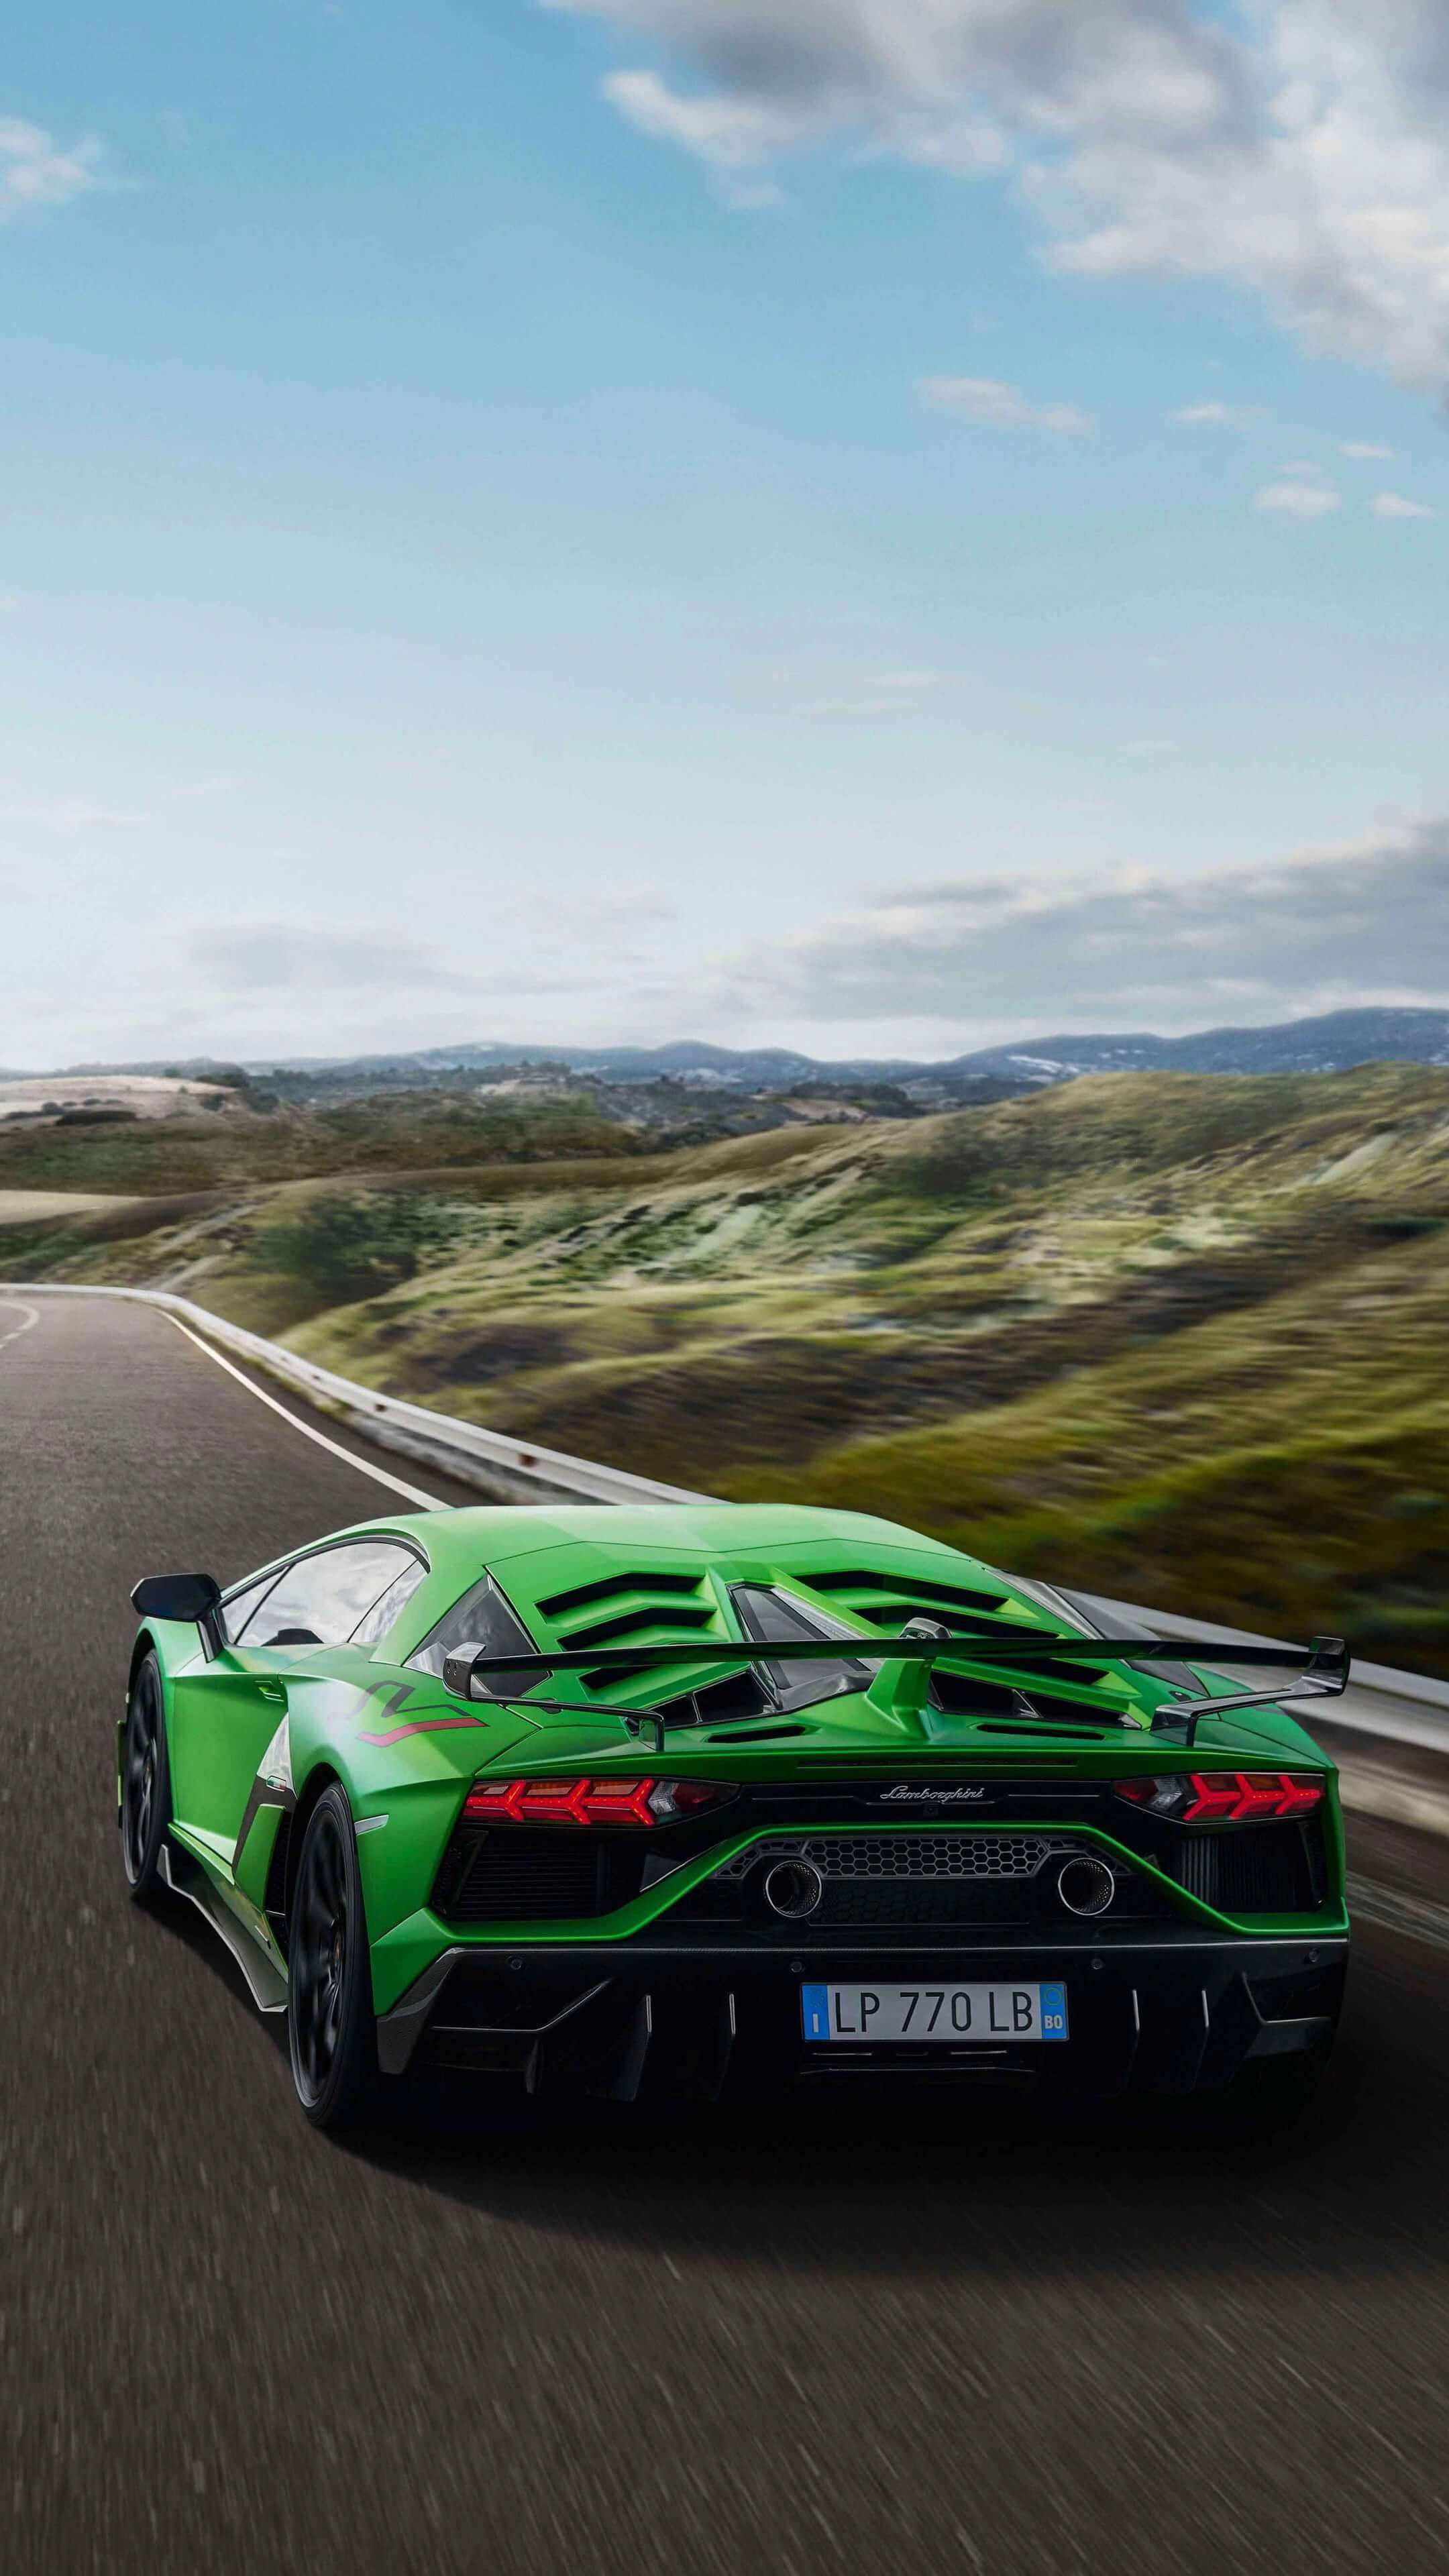 Lamborghini Aventador iPhone Wallpapers - Wallpaper Cave